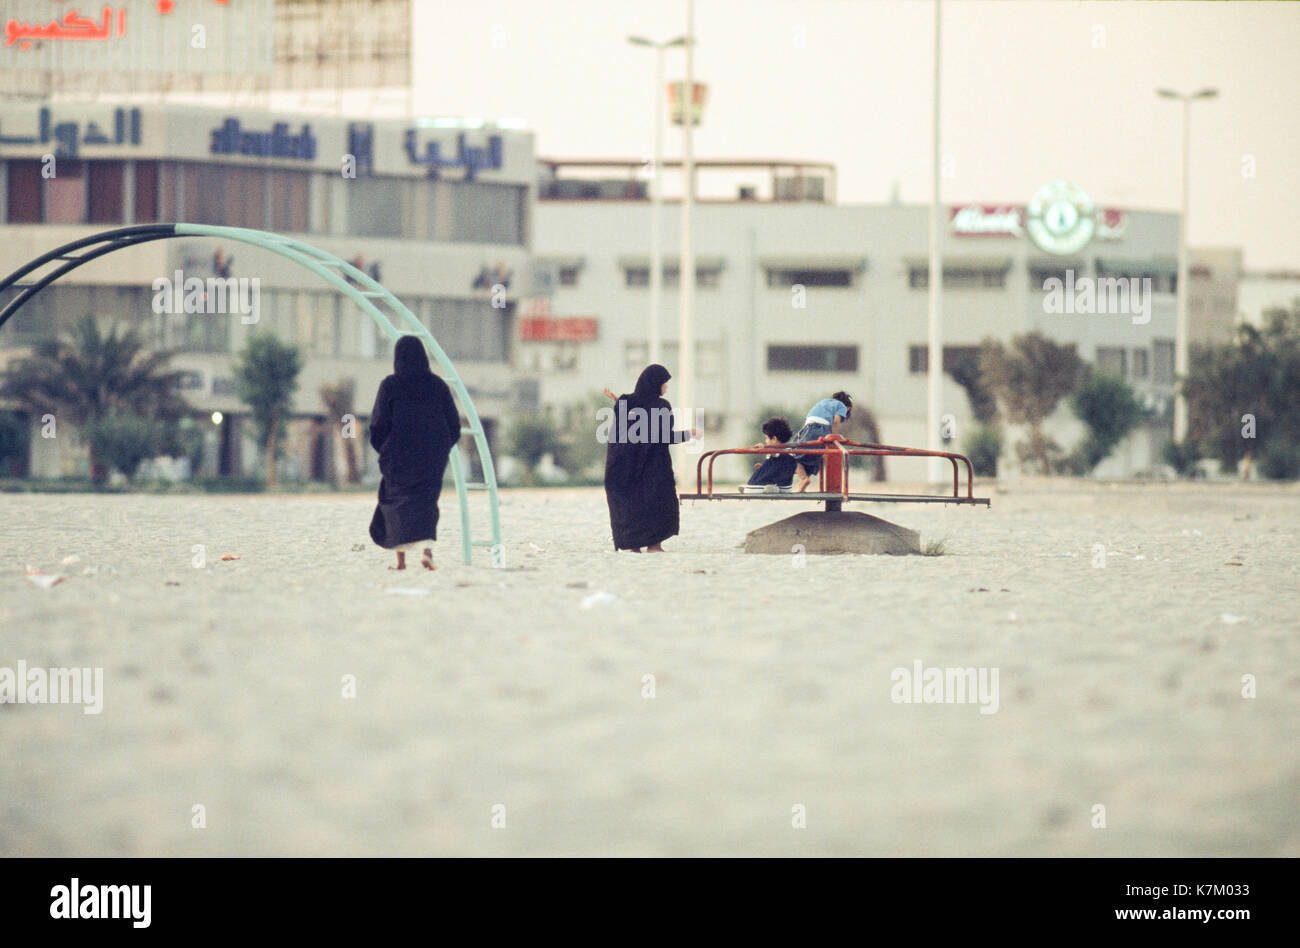 A street scene in the eastern province city of Qatif, Saudi Arabia. Stock Photo